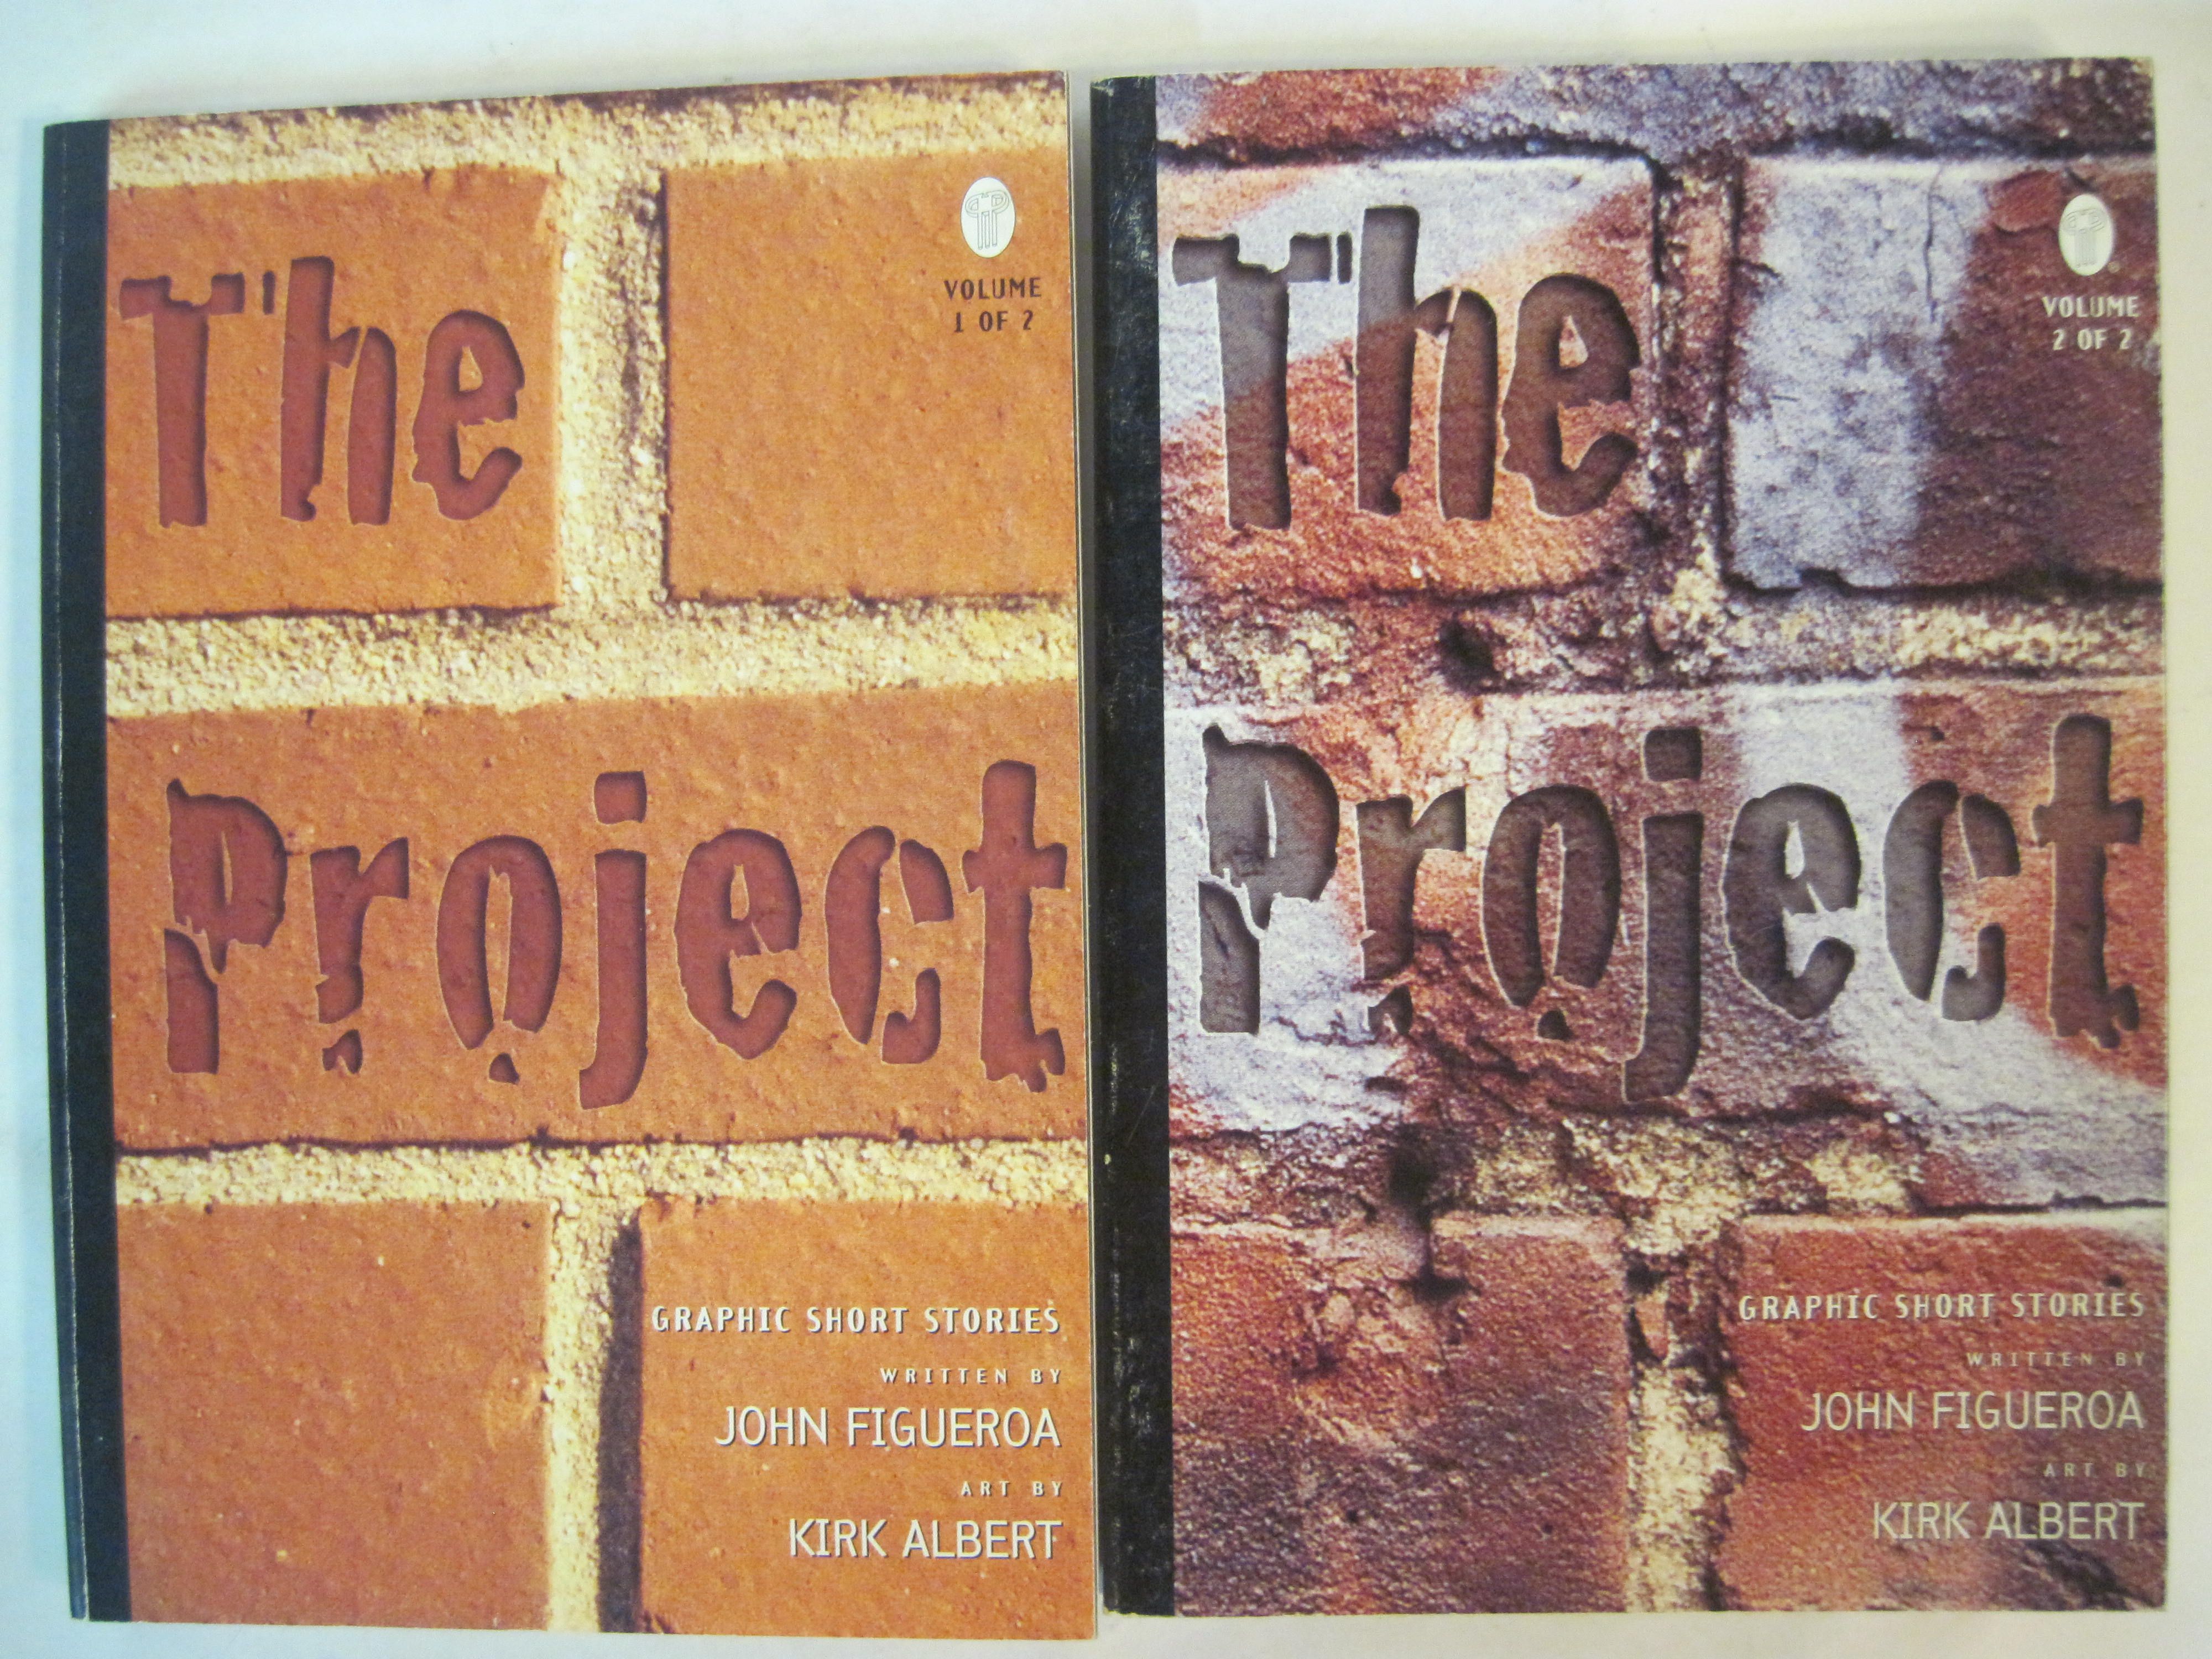 THE PROJECT VOLUMES 1 & 2 GRAPHIC SHORT STORIES JOHN FIGUEROA & KIRK